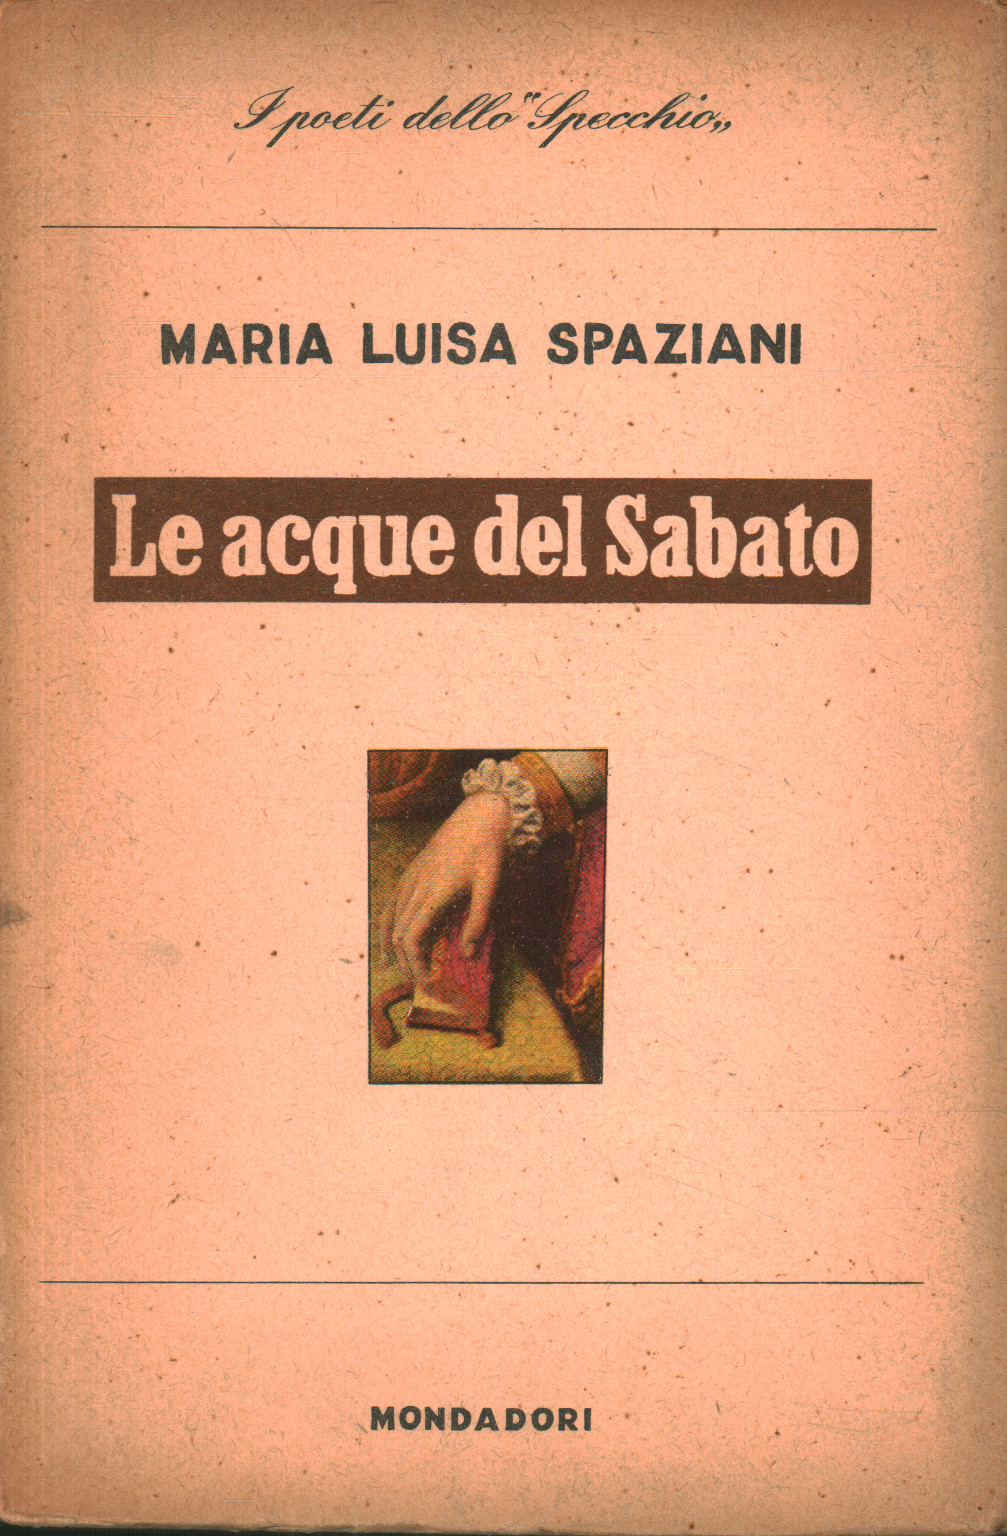 Les eaux du samedi, Maria Luisa Spaziani